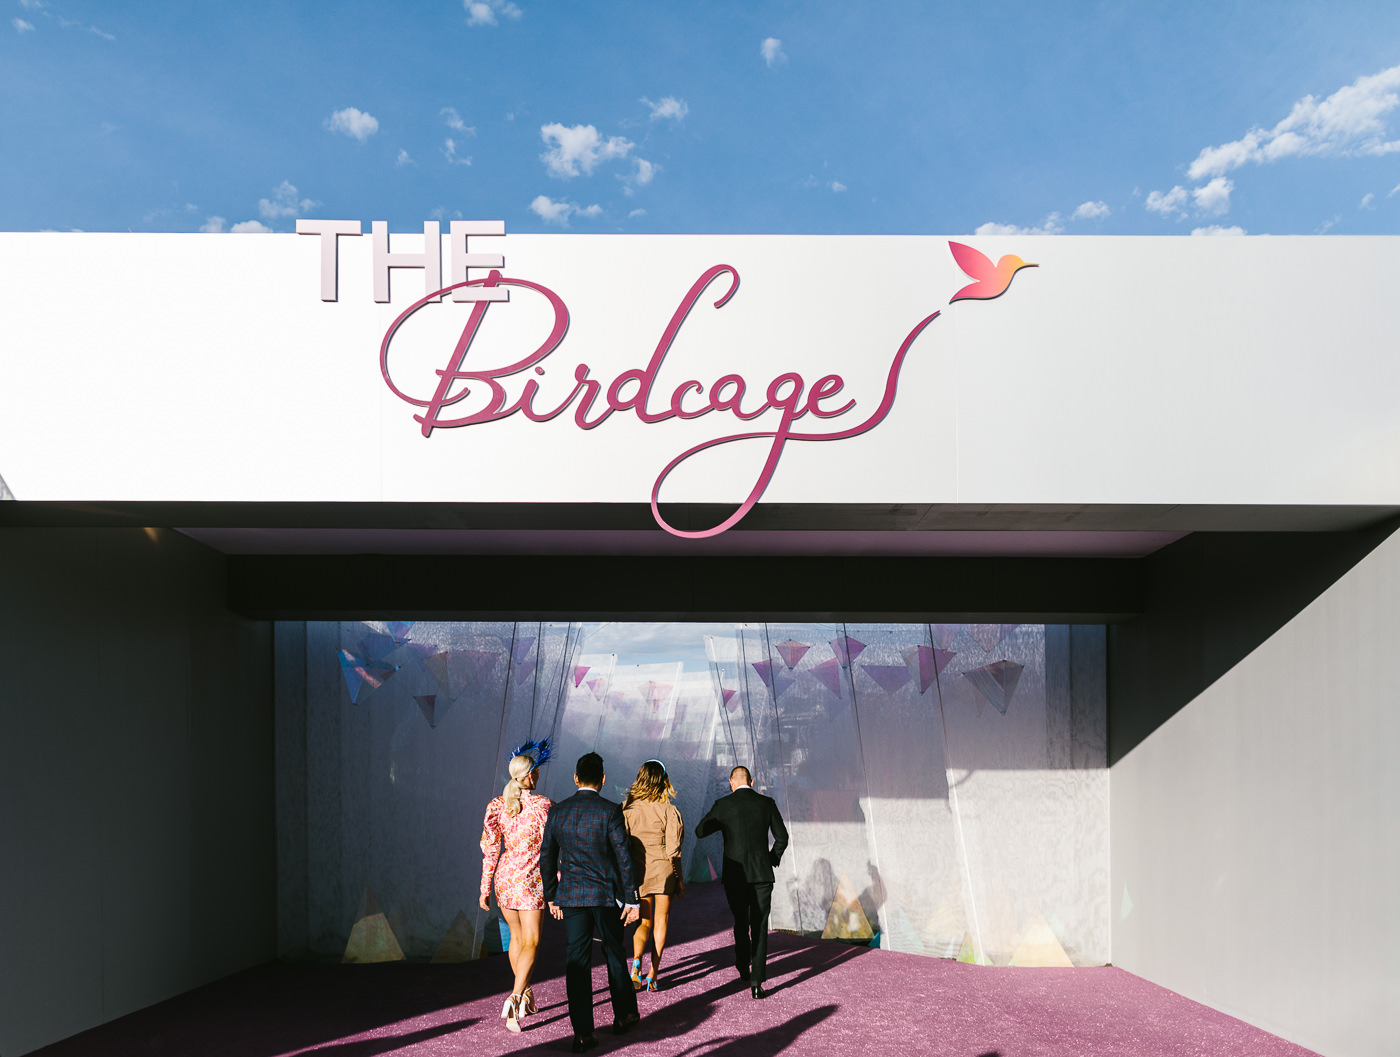 A walk through the Birdcage at the 2019 Melbourne Cup - entrance